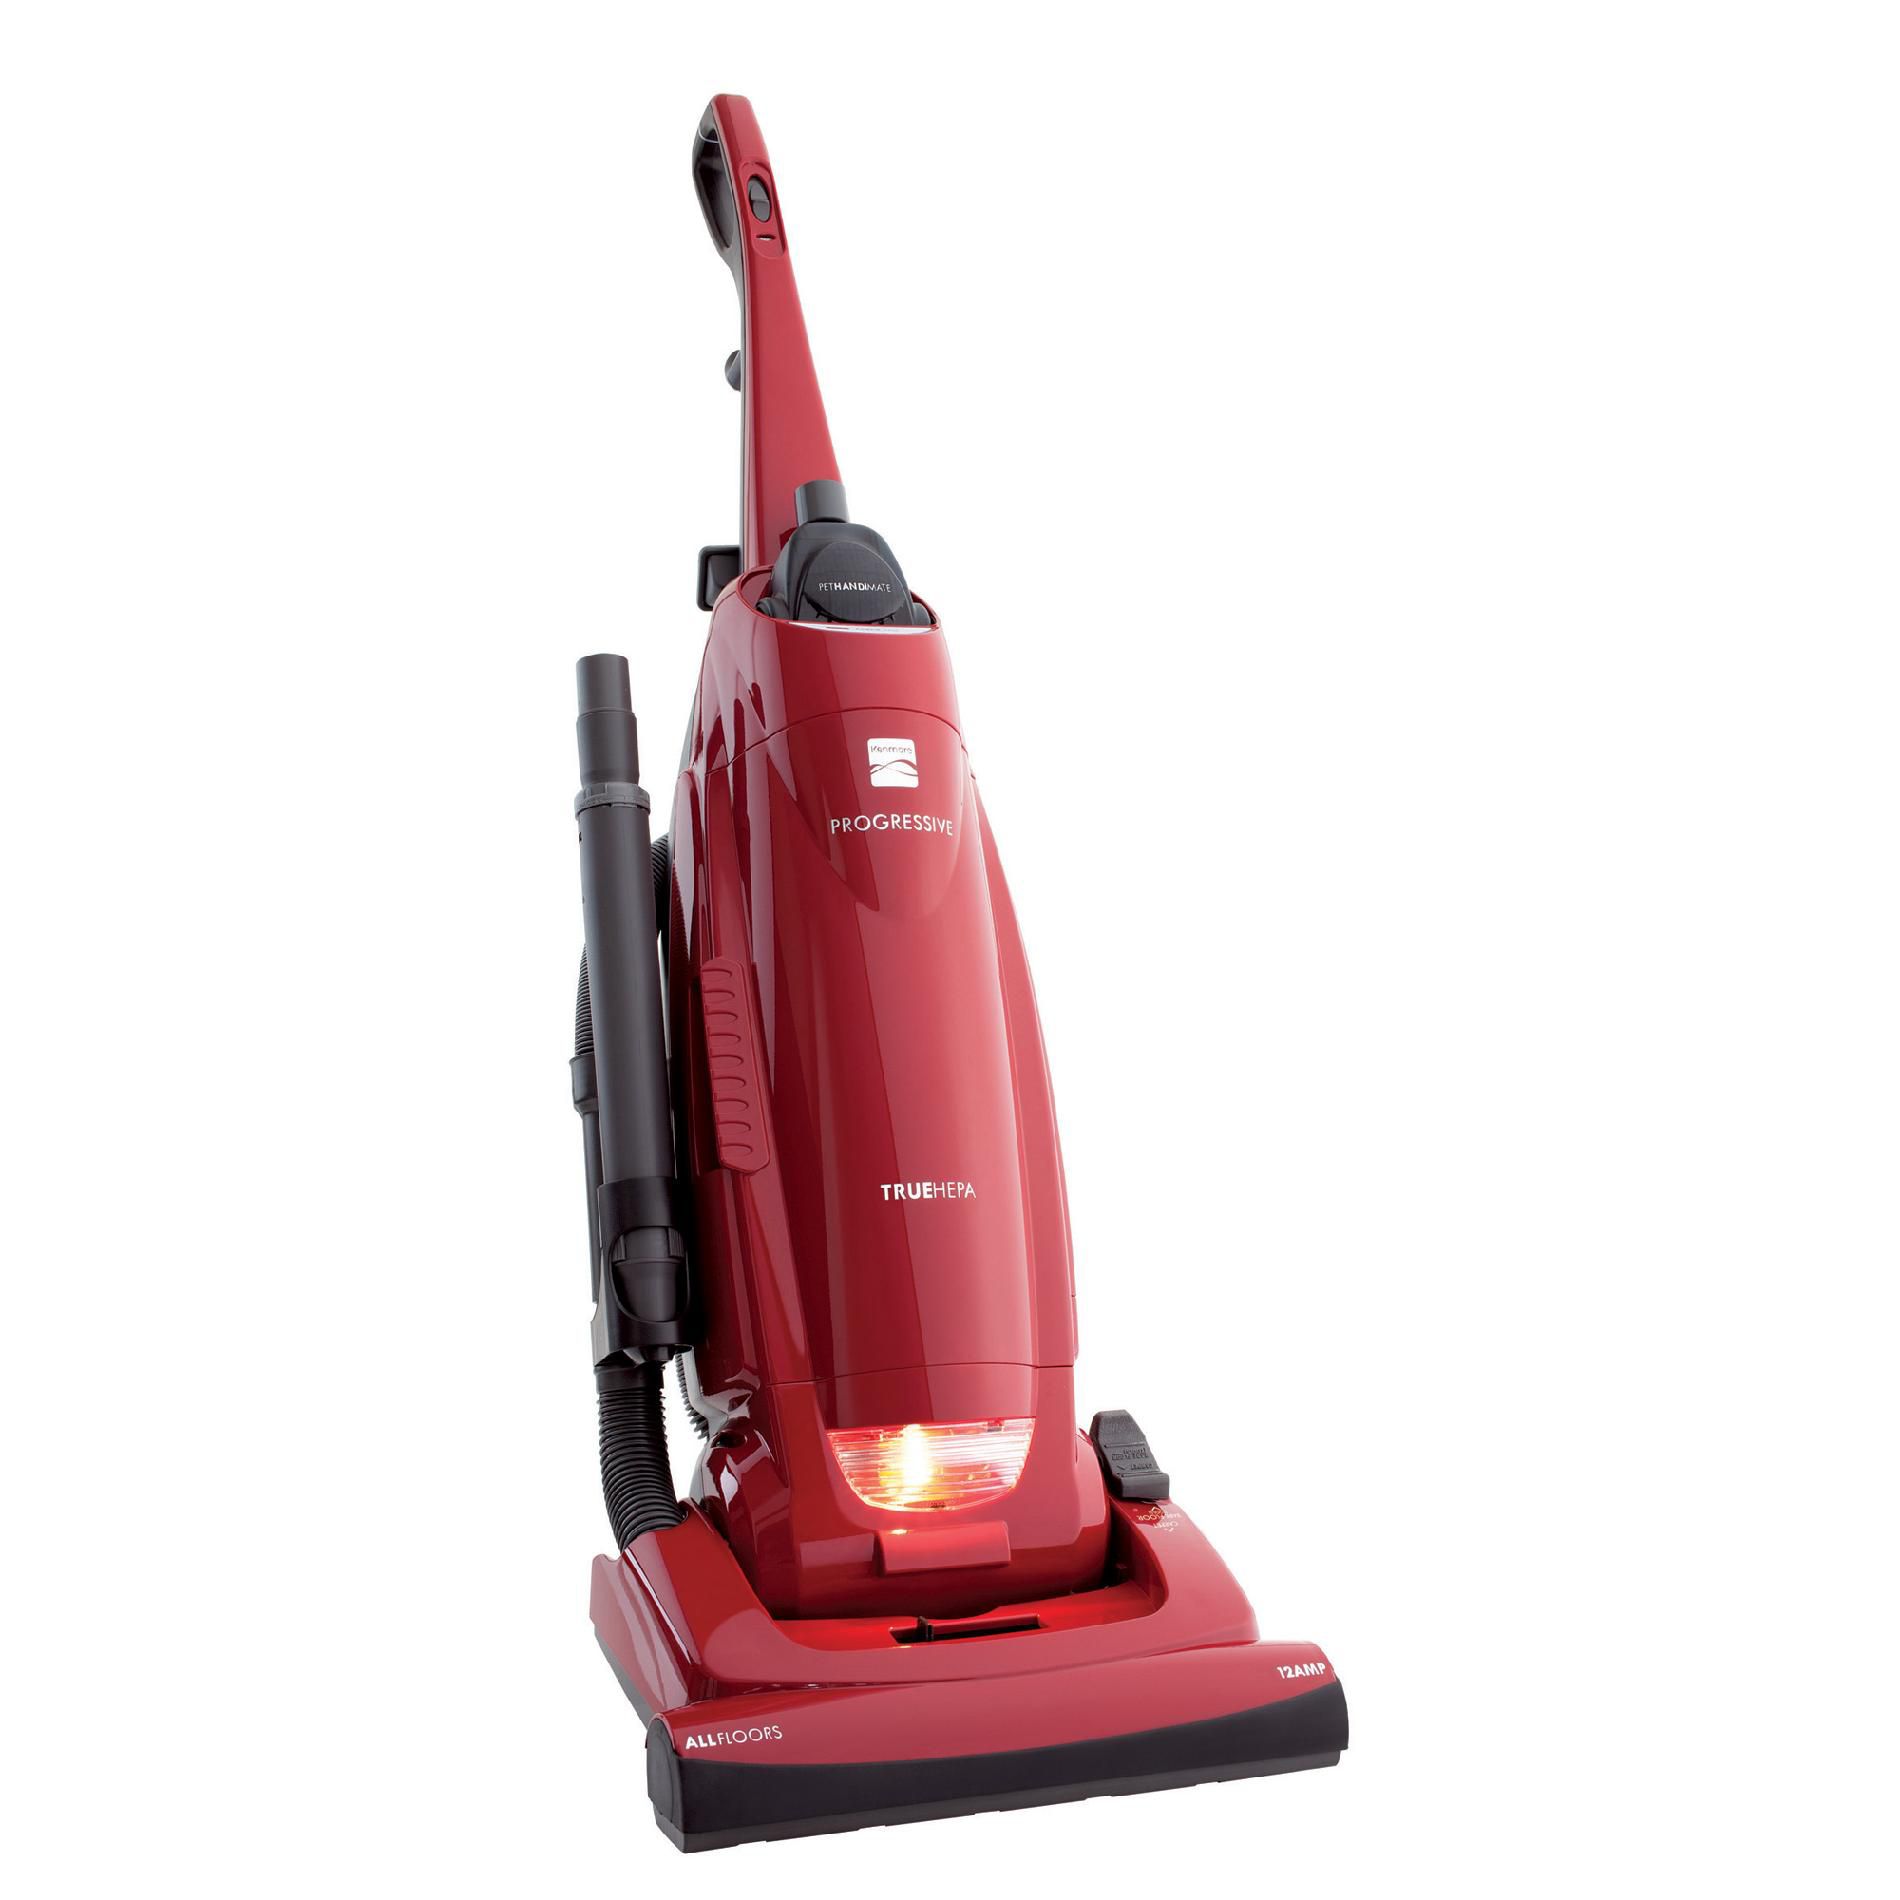 Kenmore Progressive Upright Vacuum 